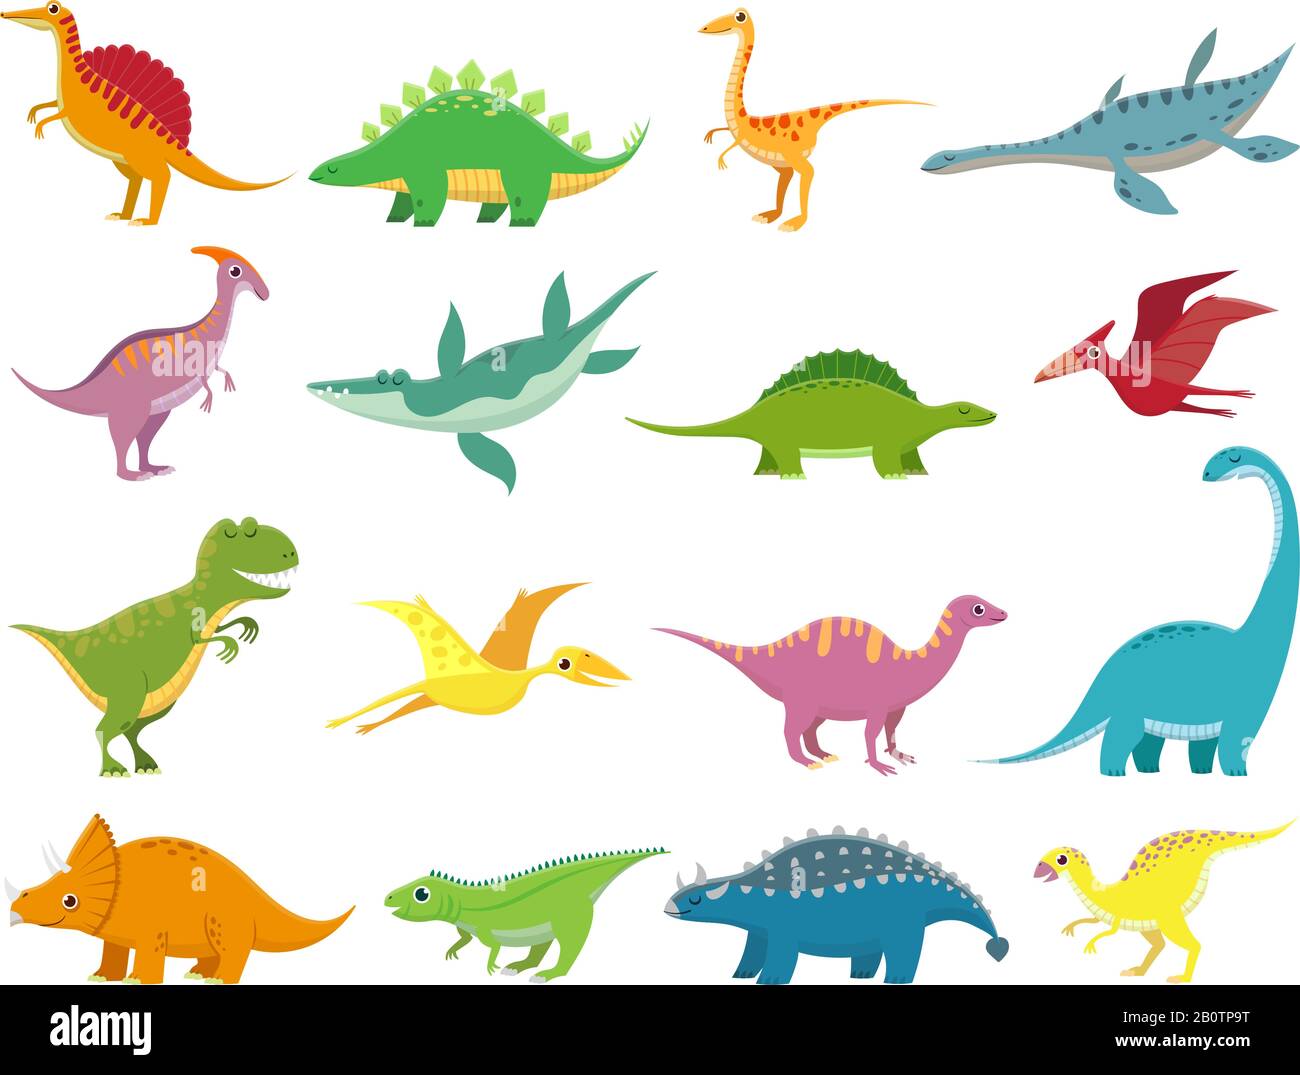 Adorable smiling dinosaurs. Cute baby stegosaurus dinosaur. Prehistoric cartoon animals of jurassic era isolated vector set Stock Vector